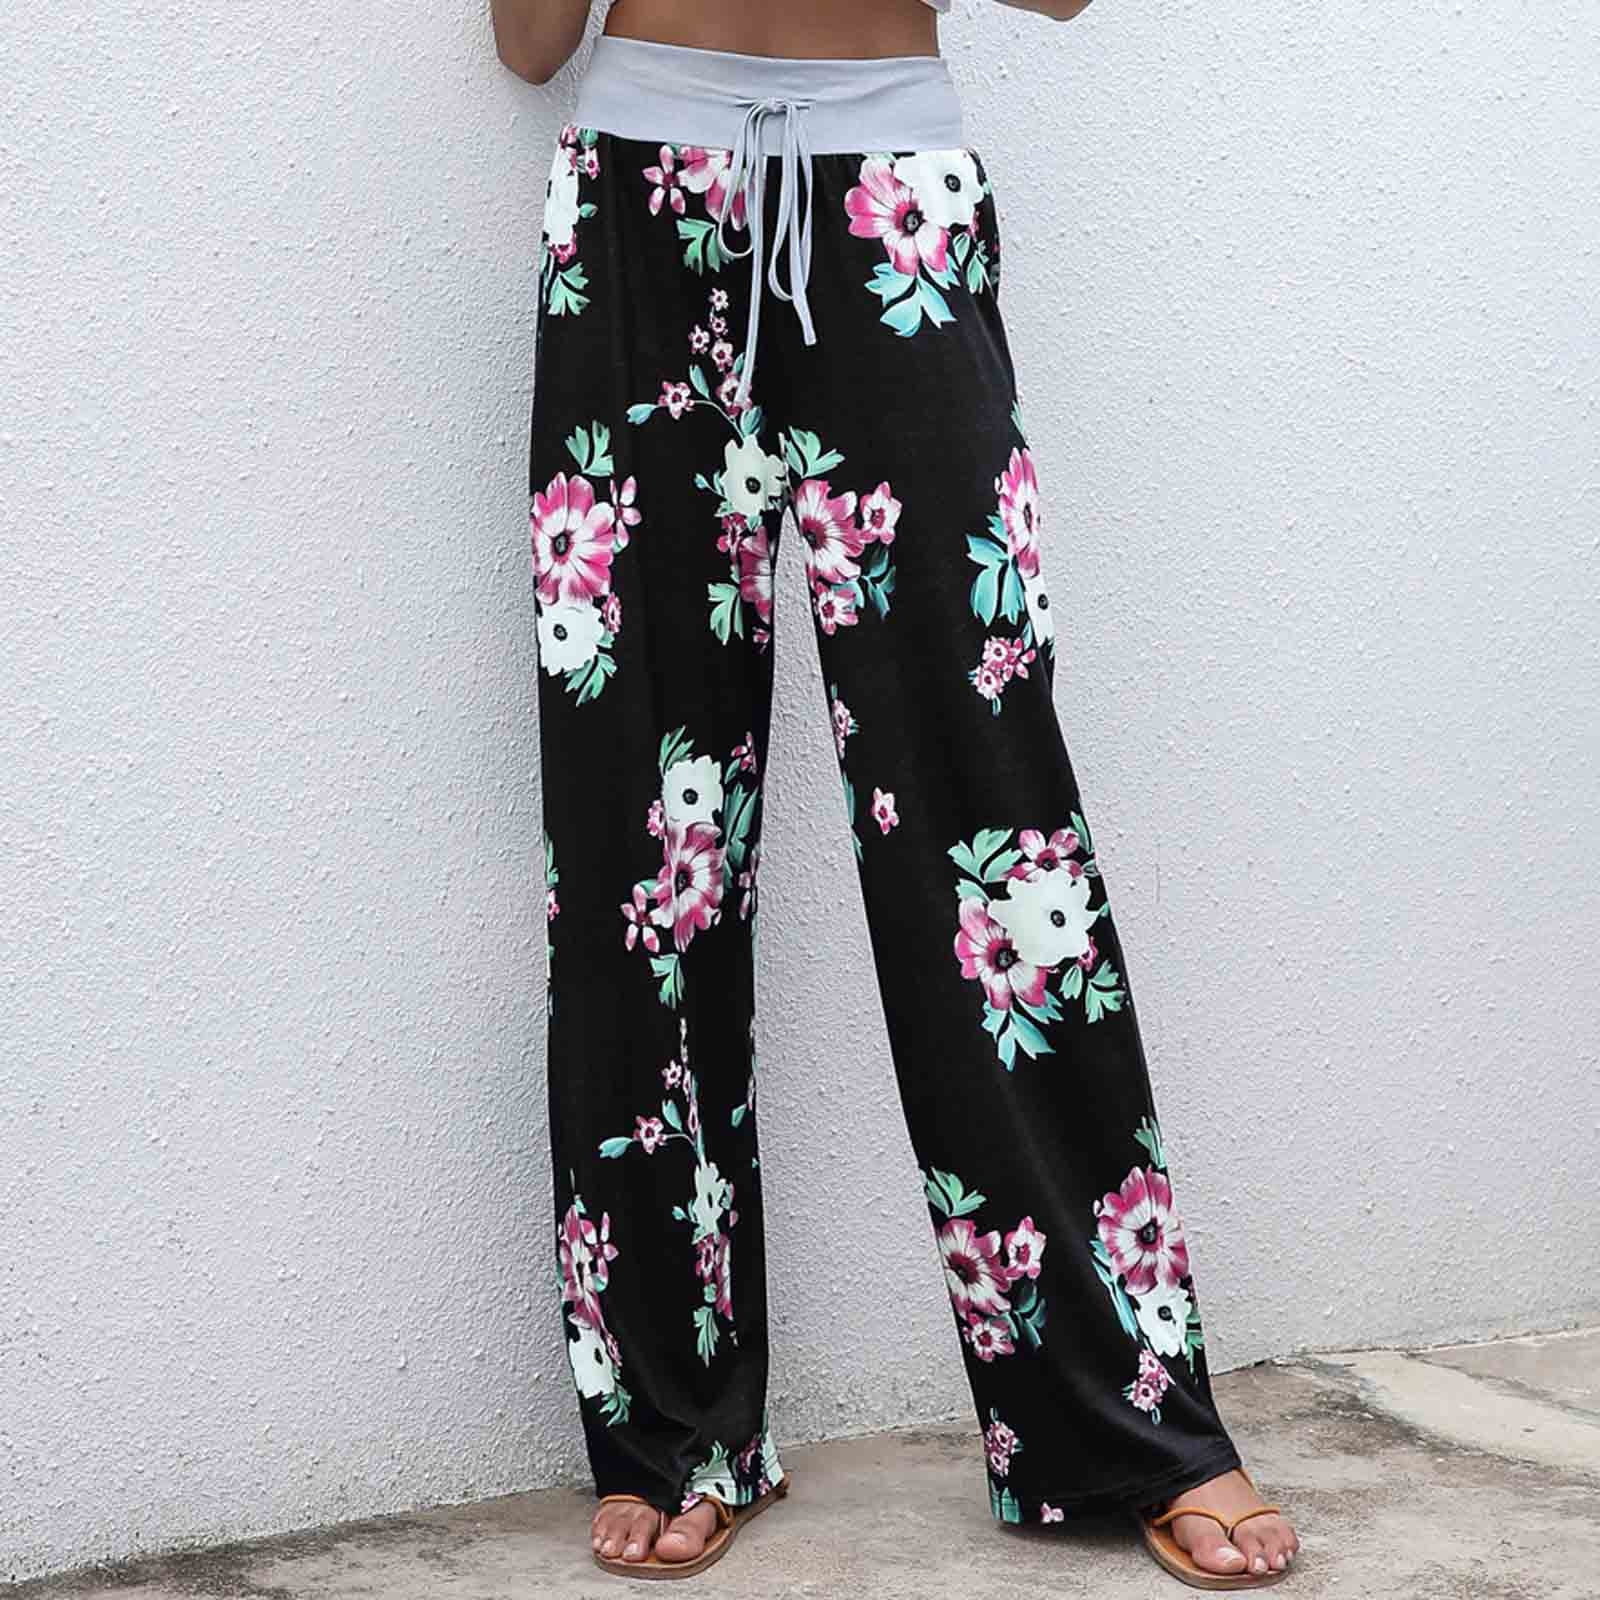 XFLWAM Women's Comfy Casual Pajama Pants Floral Print Drawstring